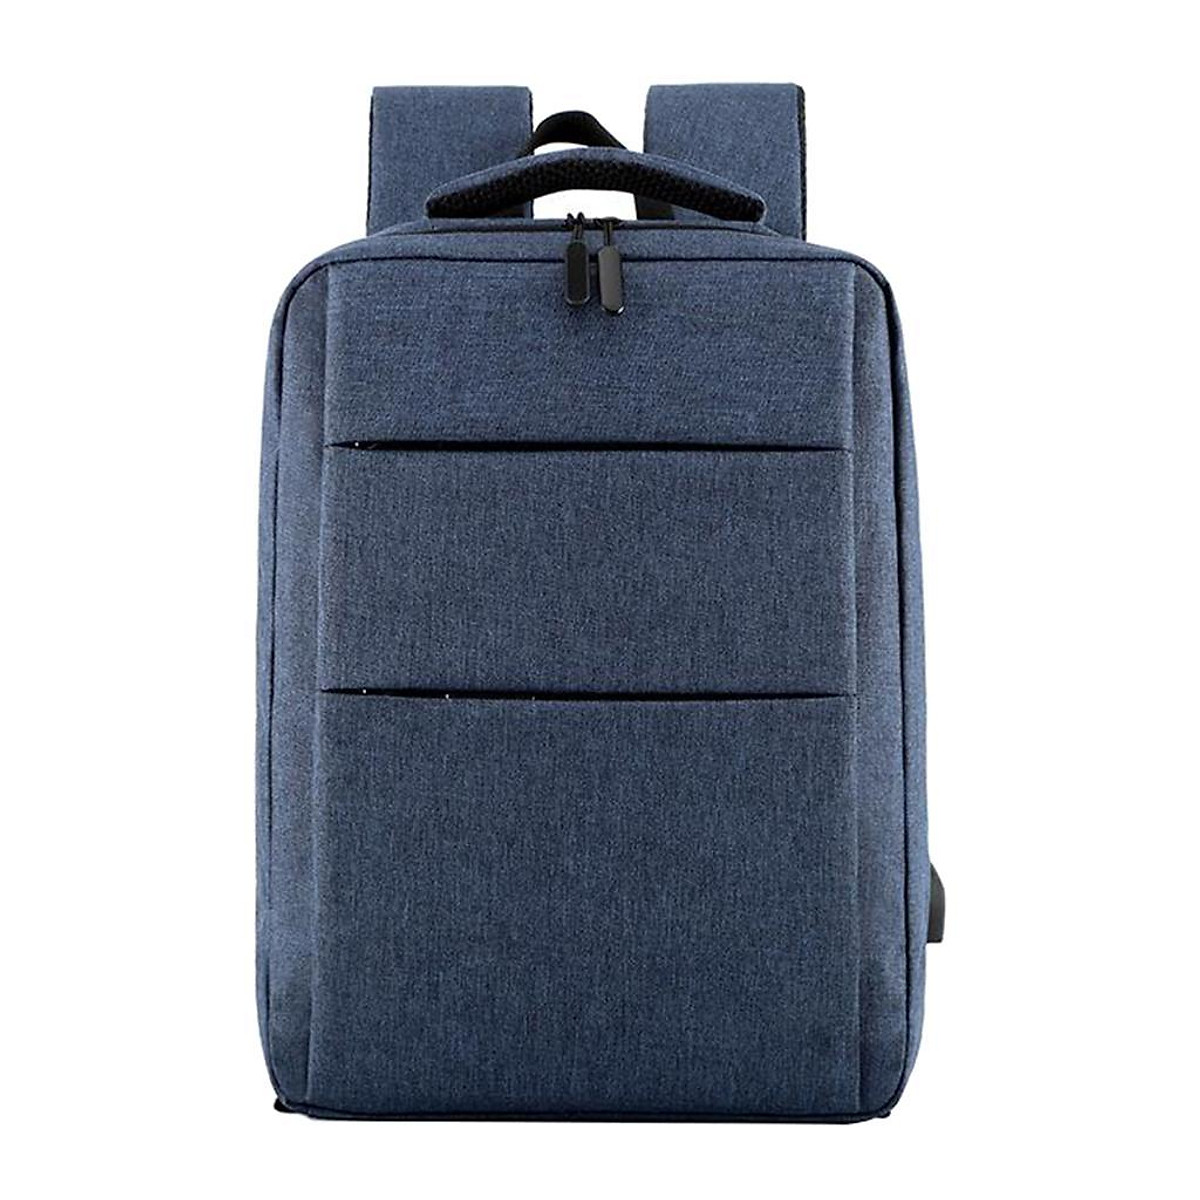 Unisex Oxford Briefcase Laptop Bags Business Office Handbags Documents  Storage Bag Solid Color Waterproof Travel Bags XA755ZC